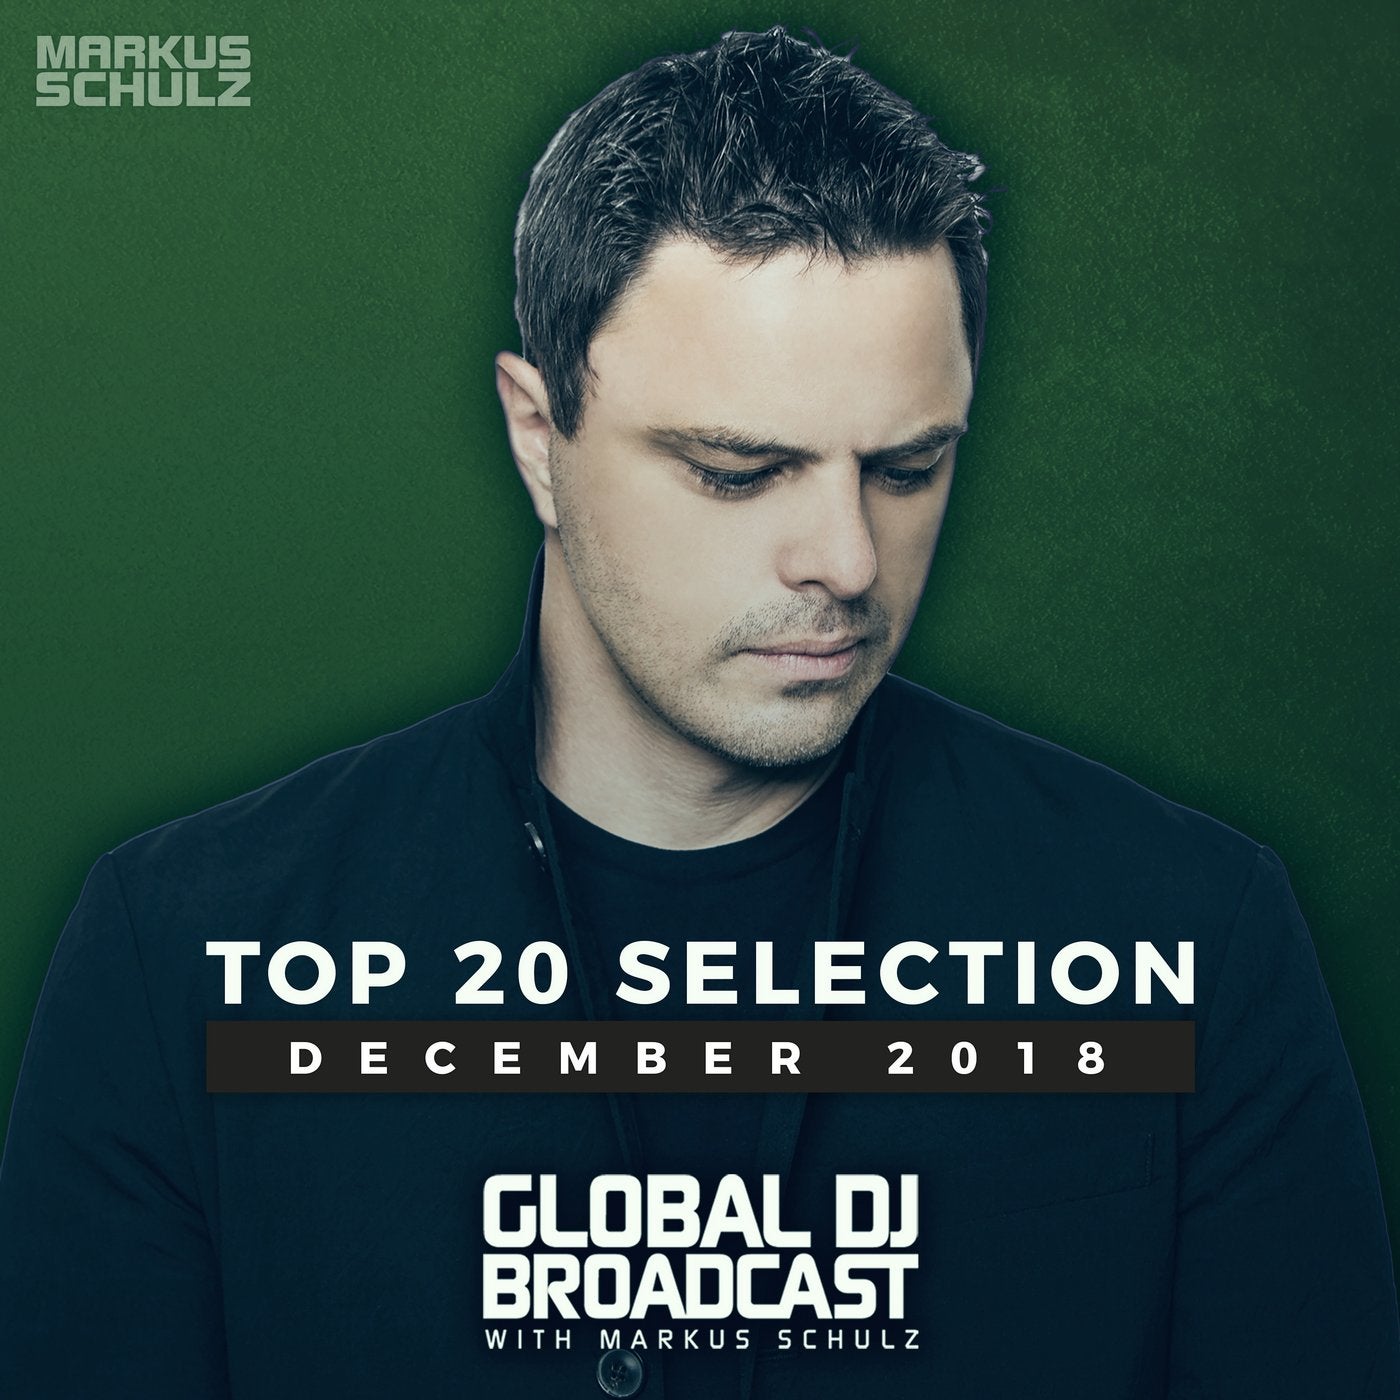 Markus Schulz presents Global DJ Broadcast - Top 20 December 2018